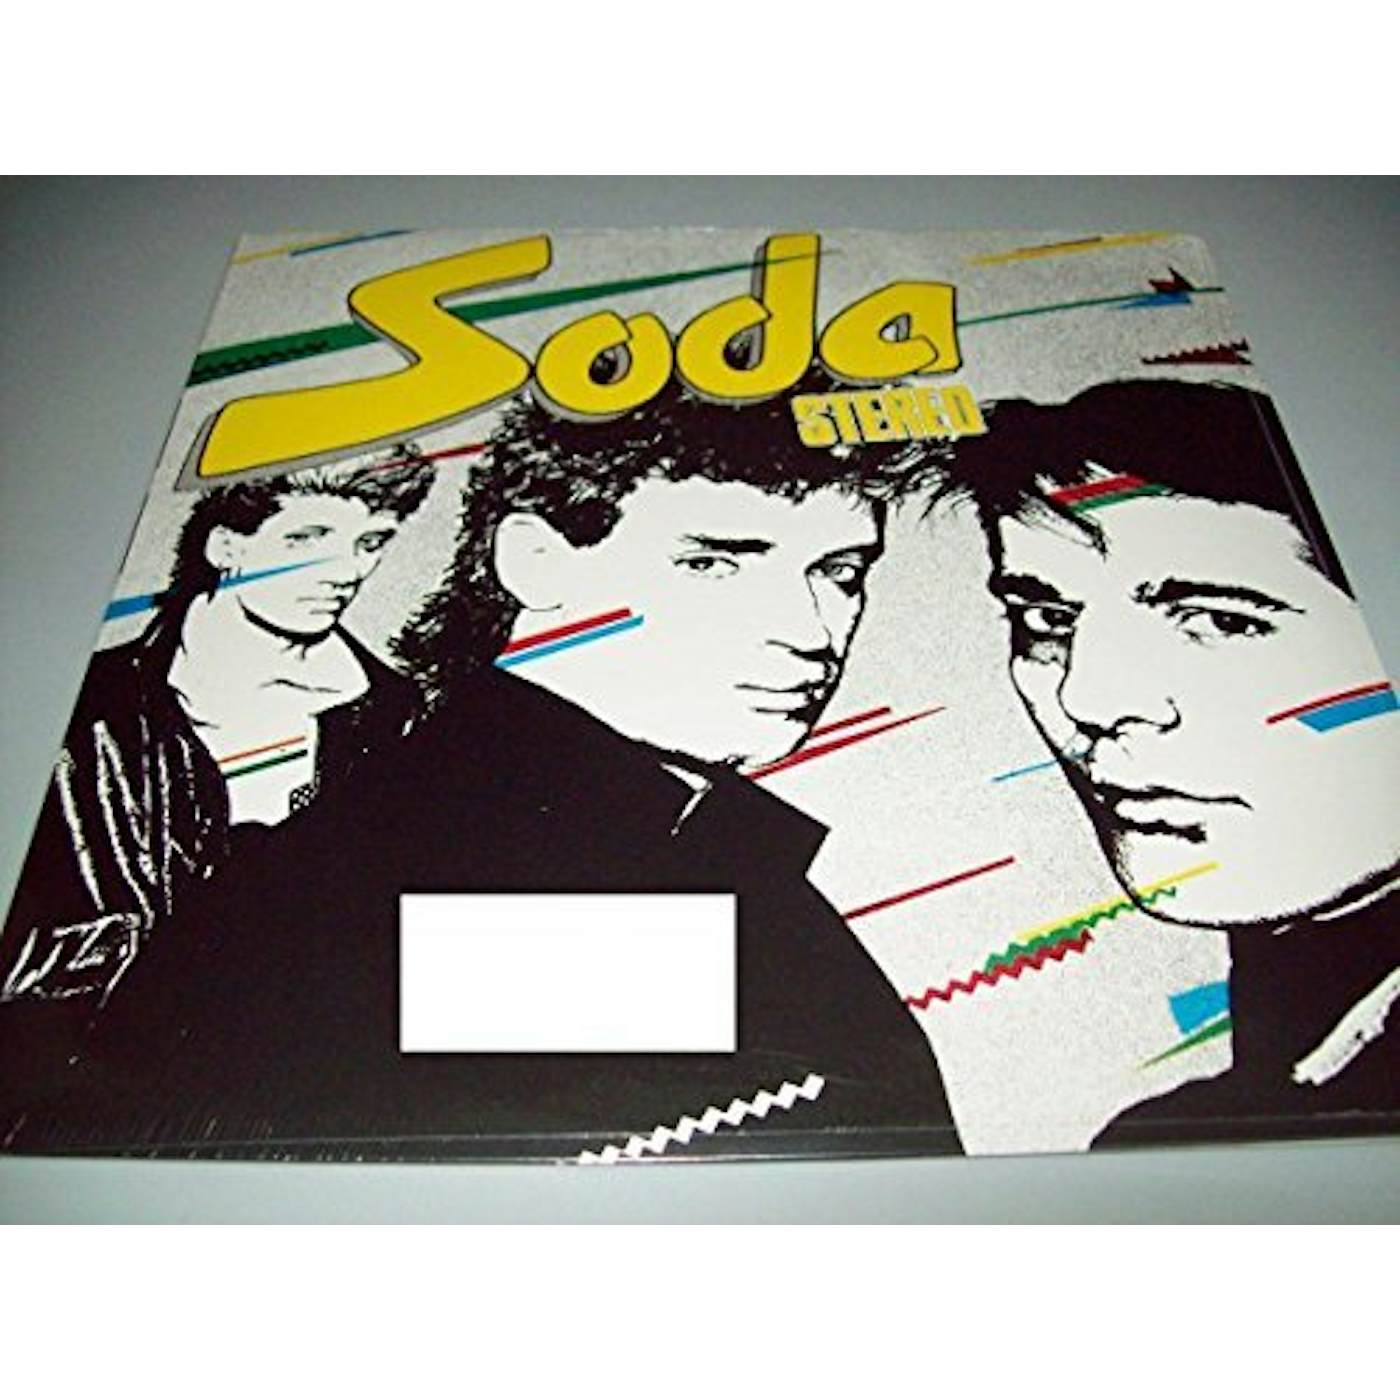 Soda Stereo Vinyl Record